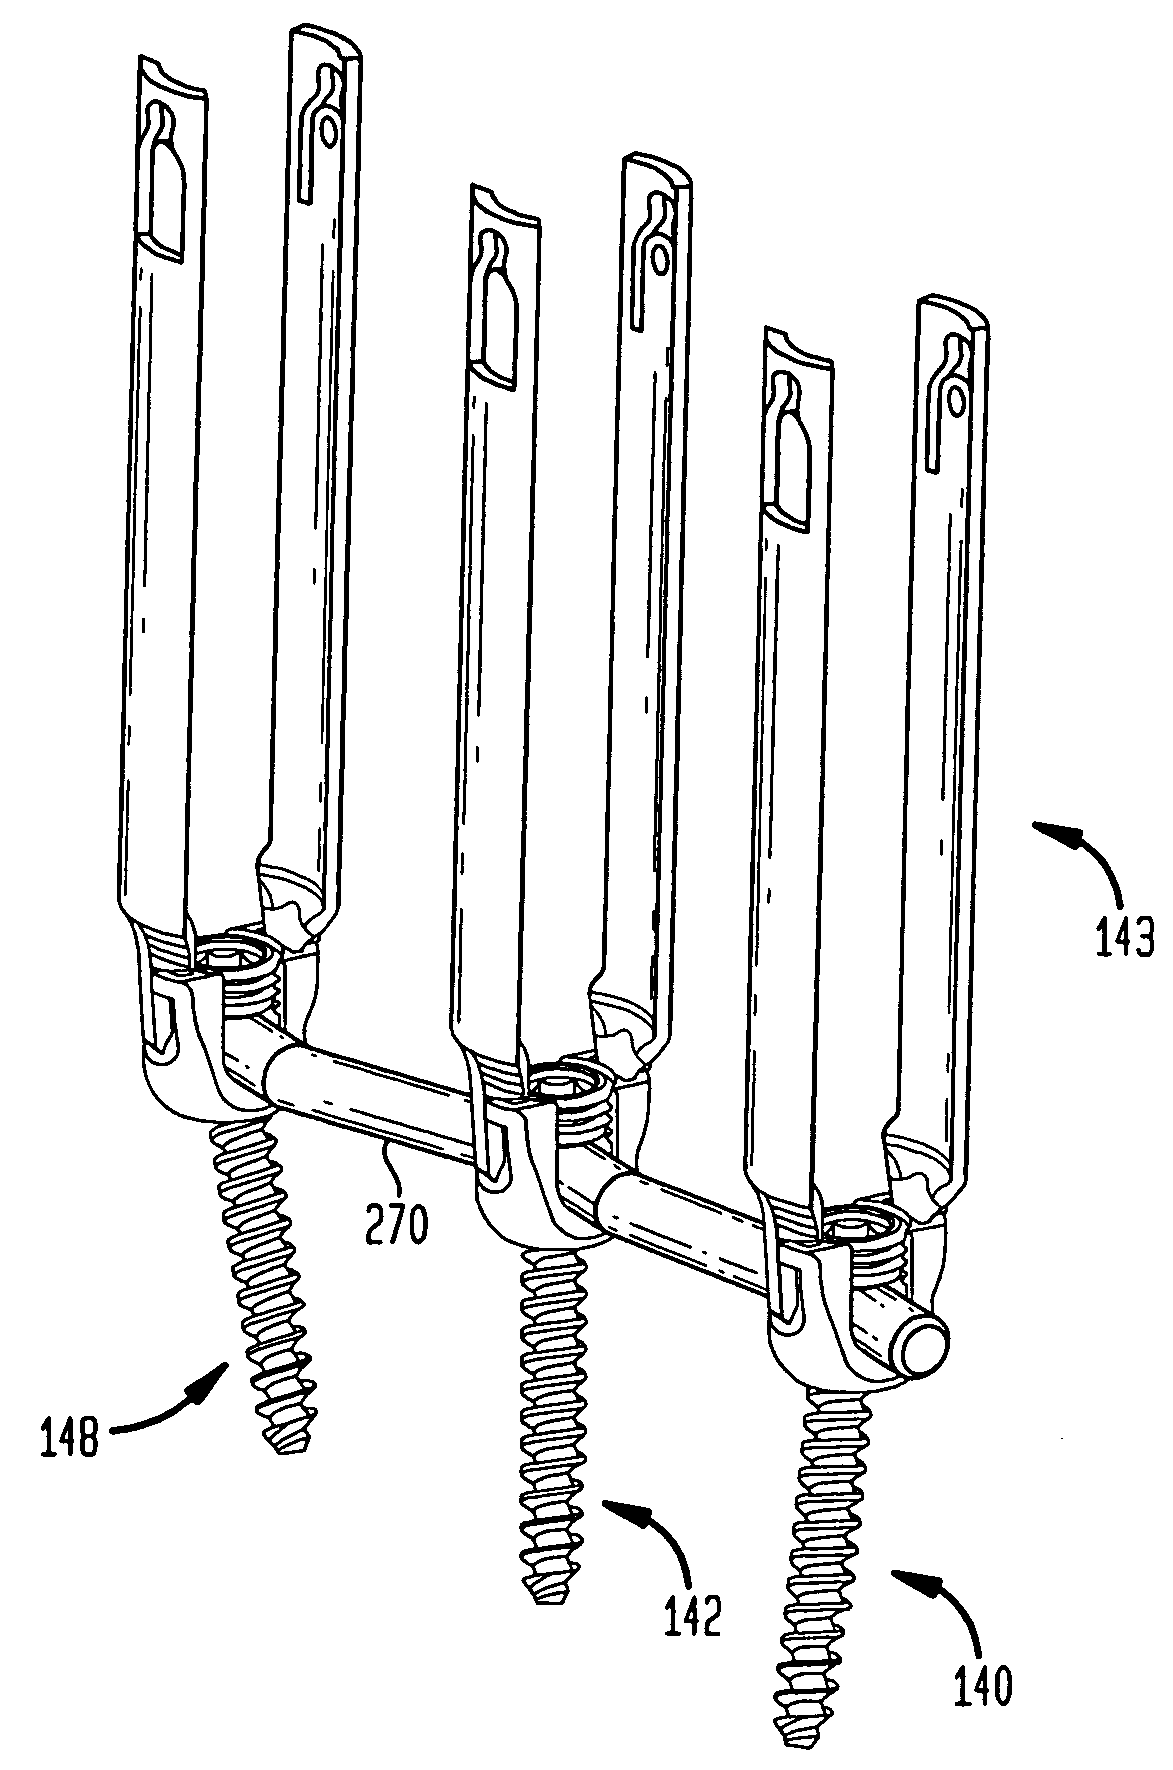 Rod contouring apparatus for percutaneous pedicle screw extension